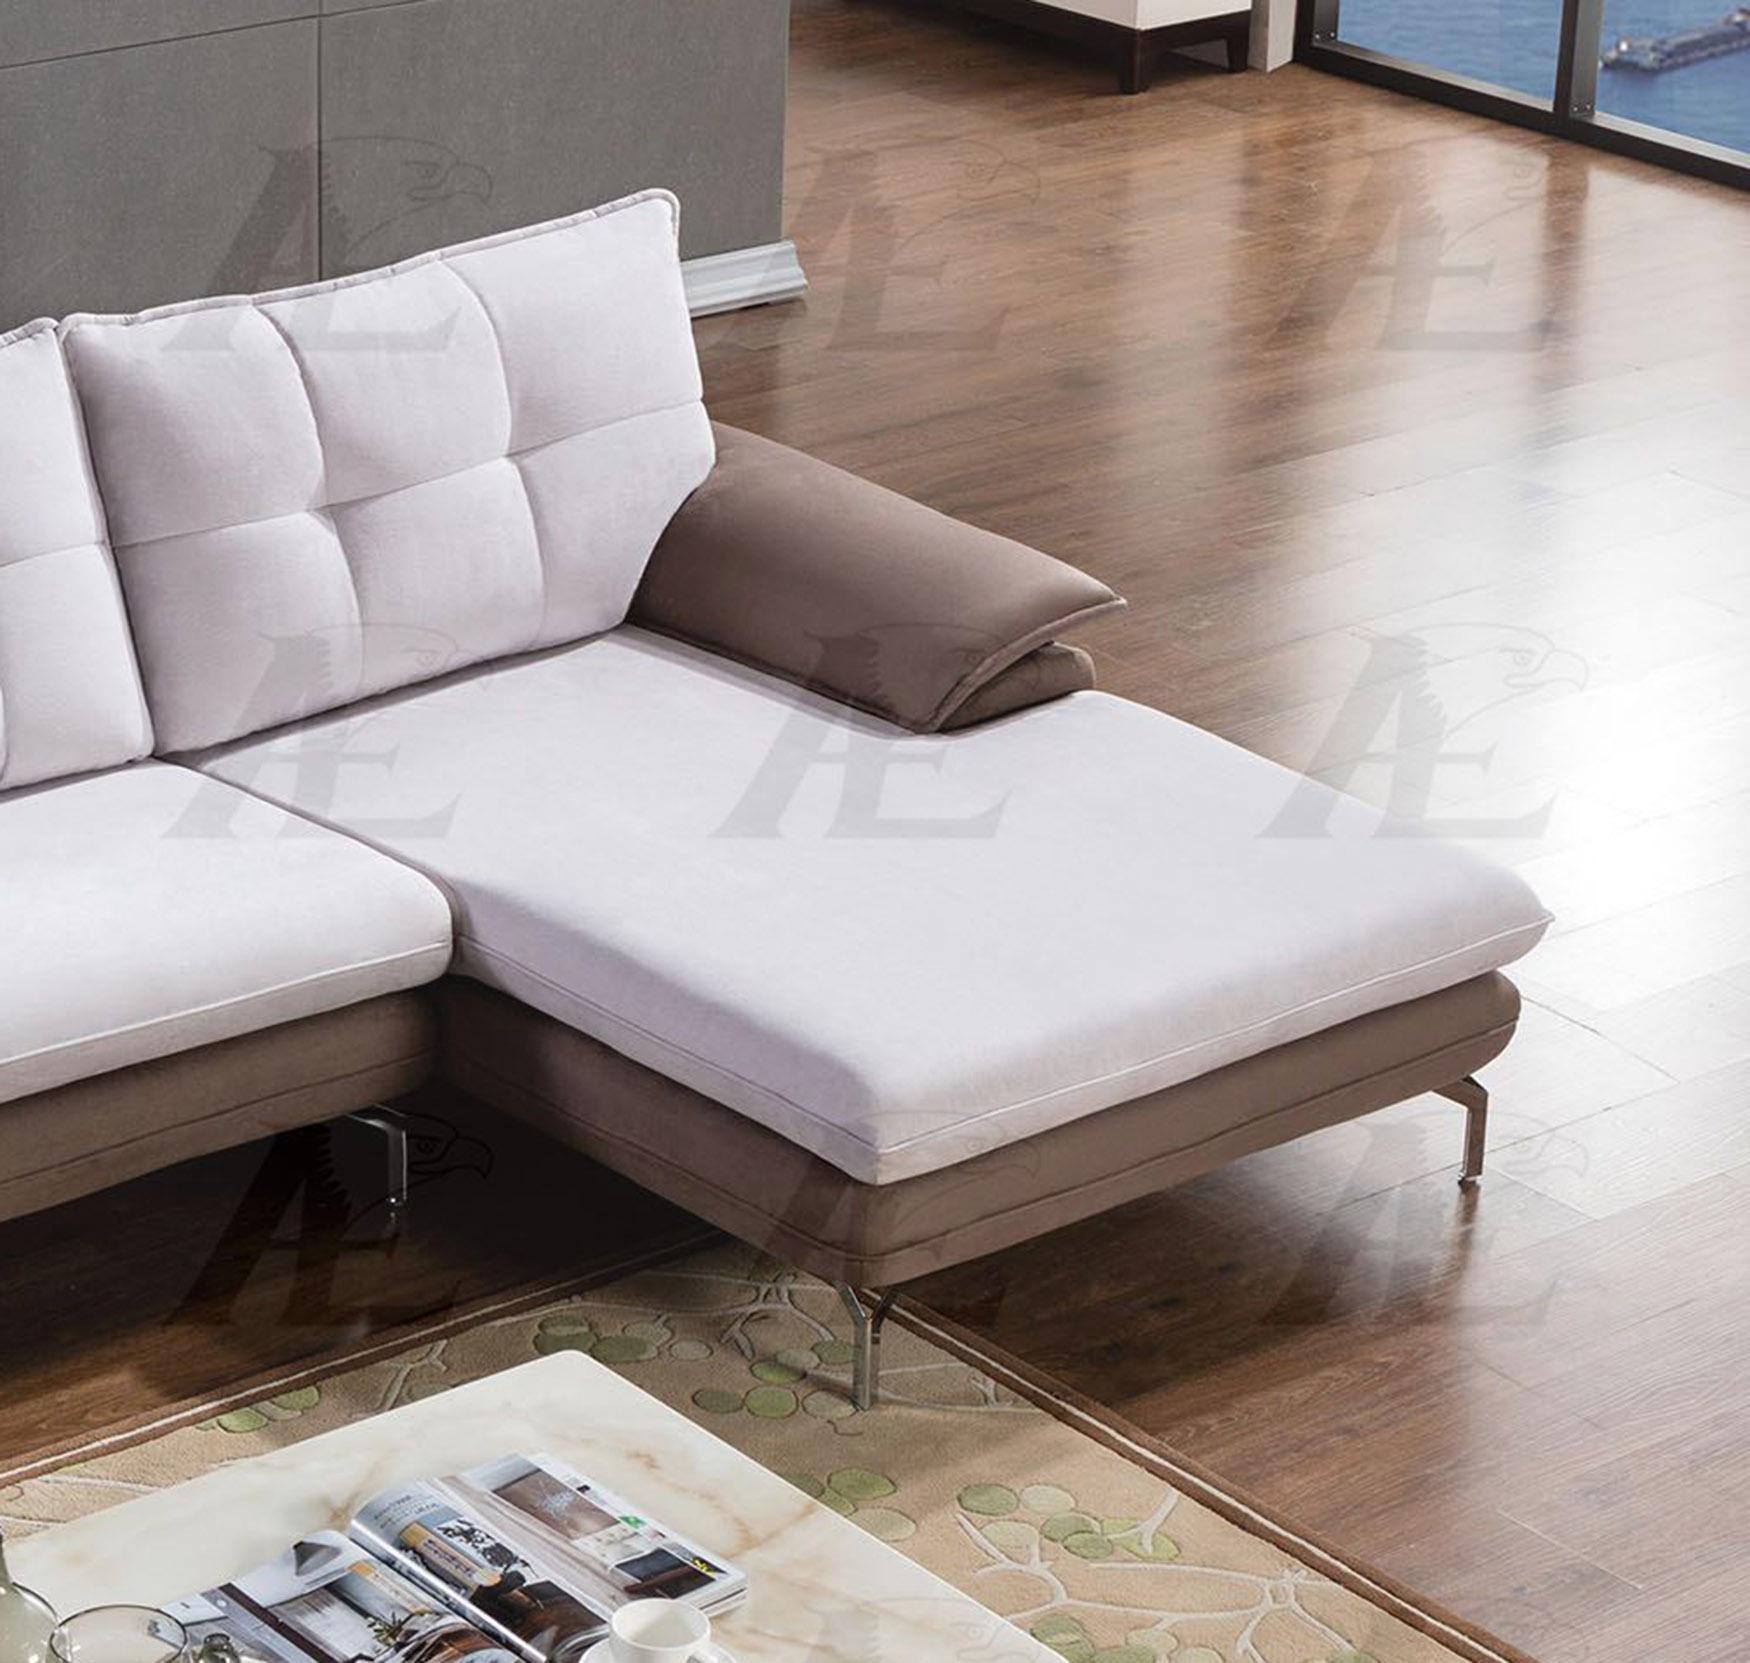 

    
American Eagle Furniture AE-L2366 Sectional Sofa White/Brown AE-L2366 Set-2 RHC
